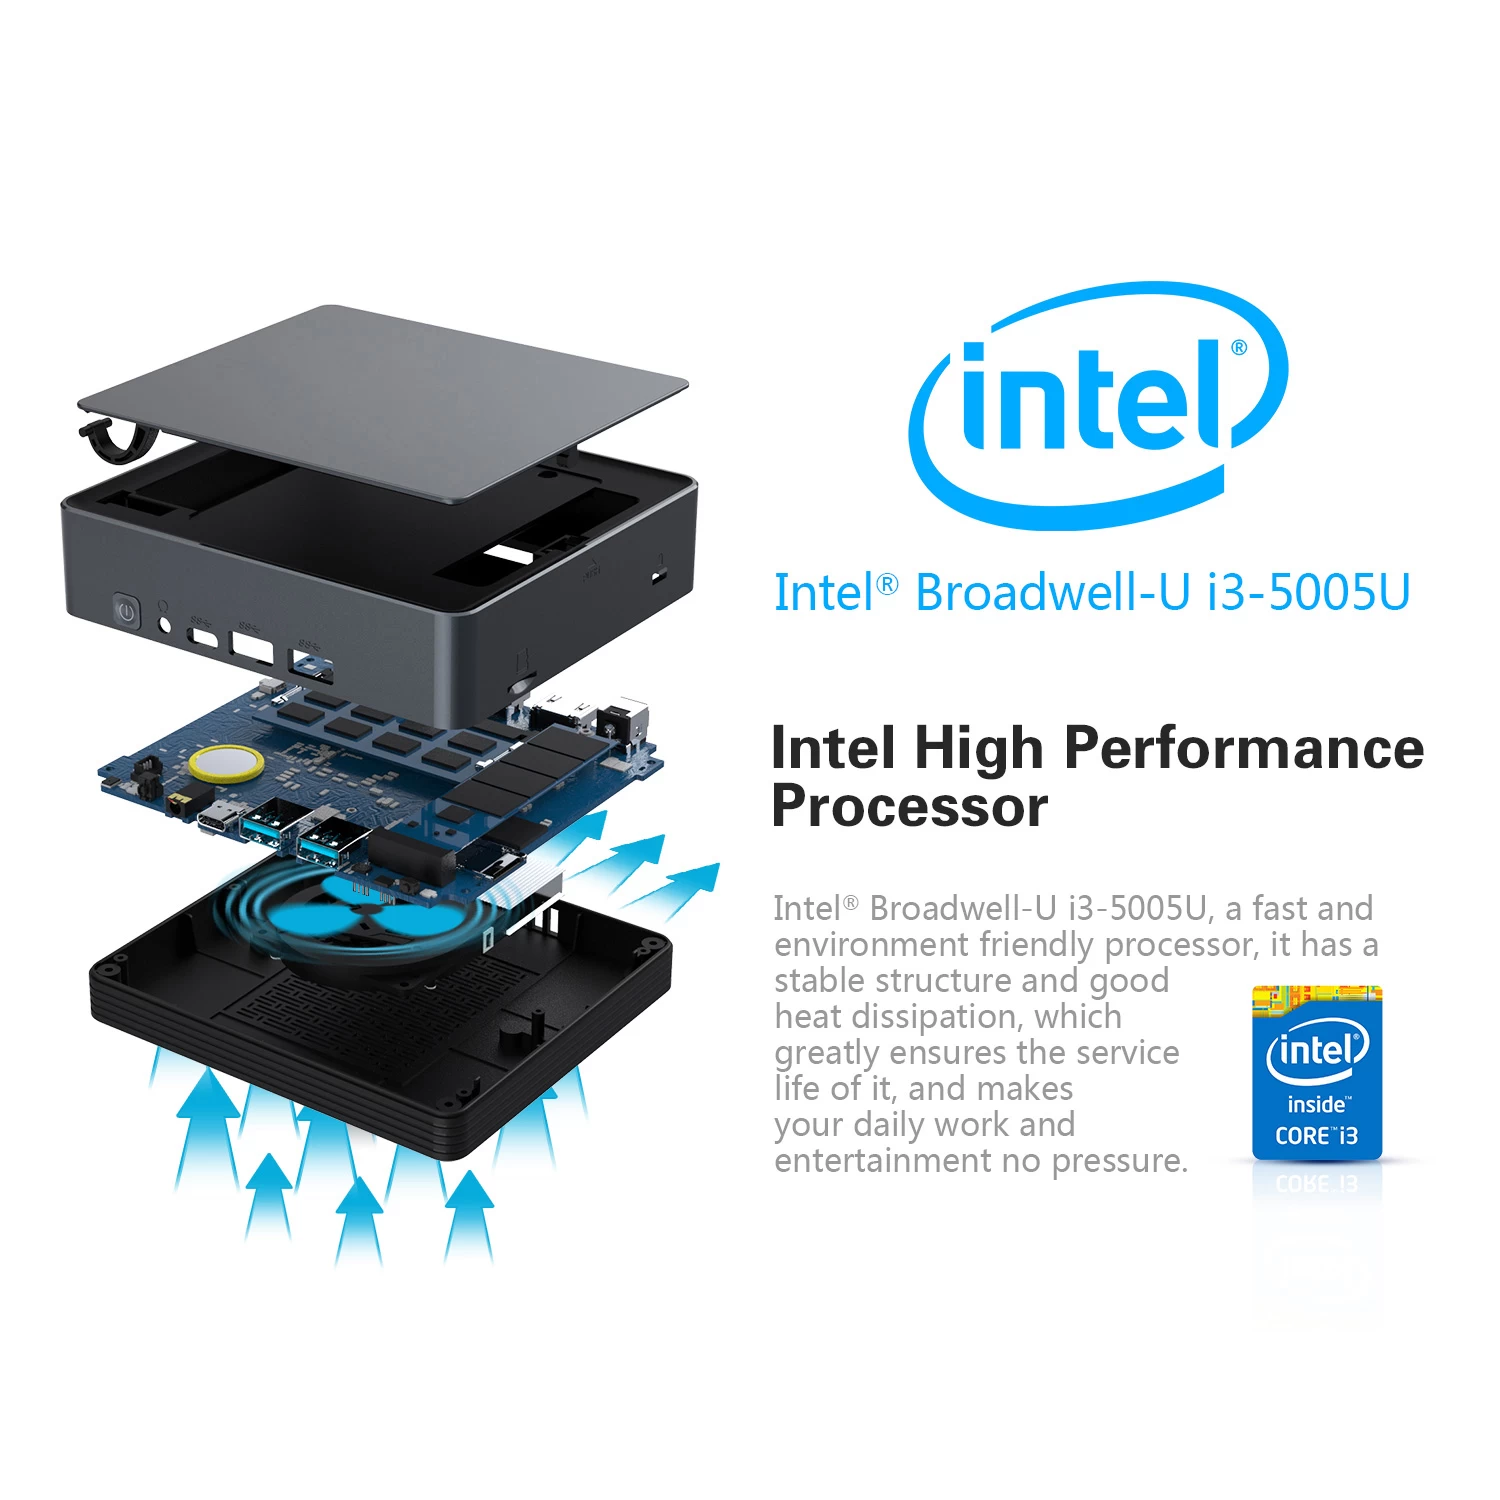 Intel Mini PC: Your Compact Computing Solution